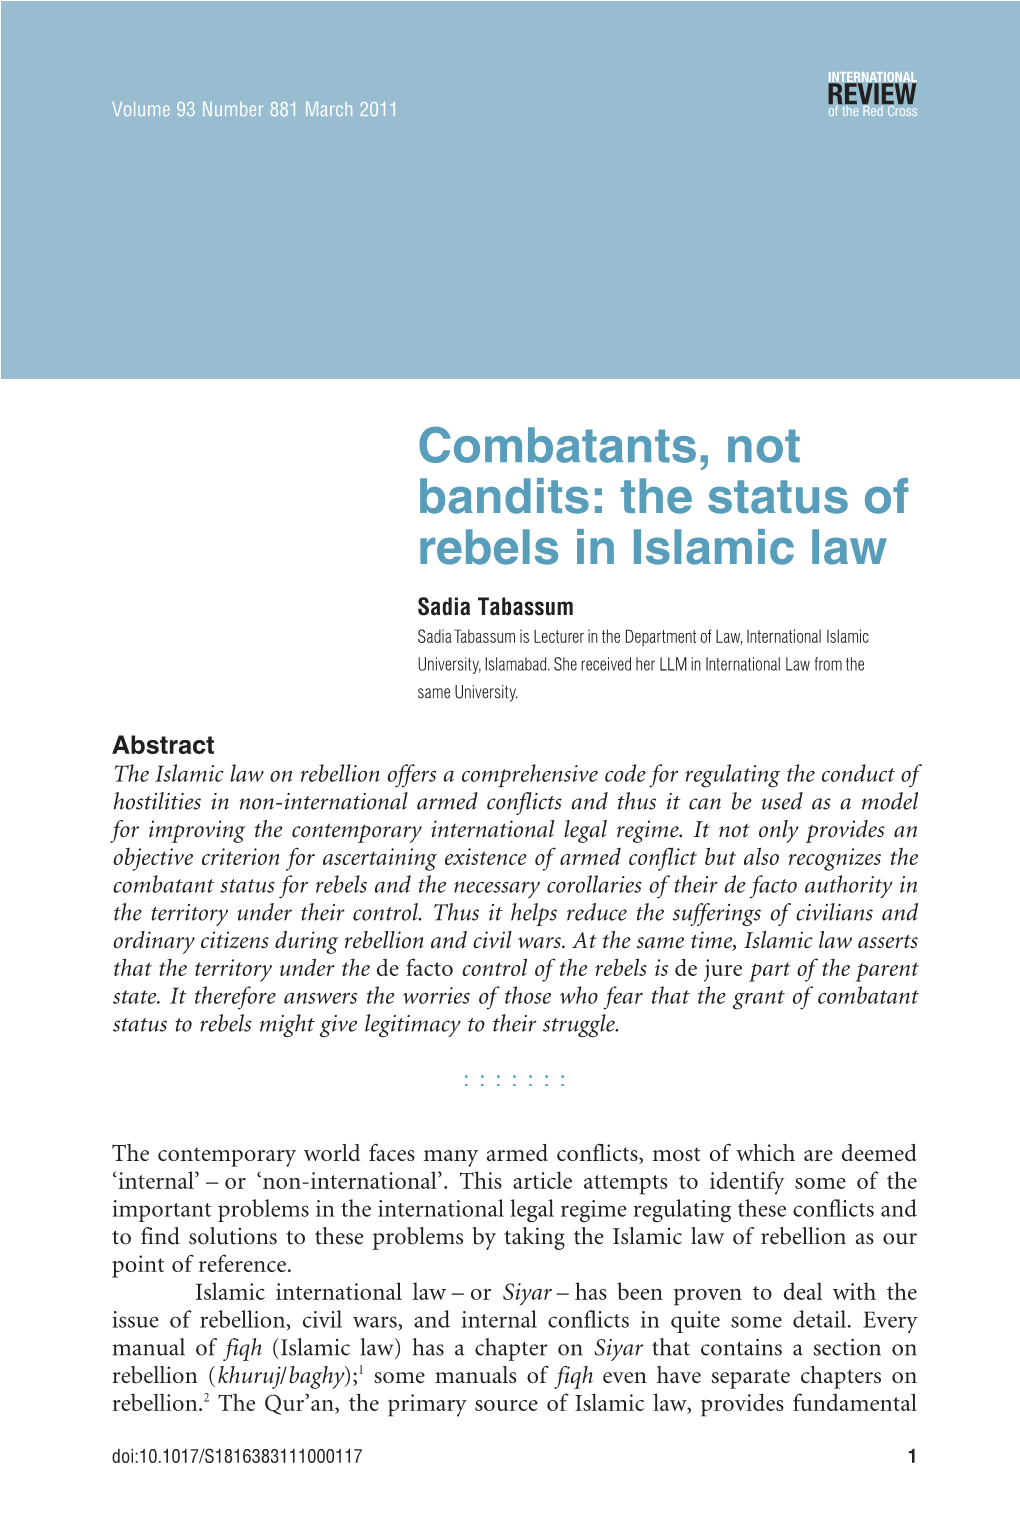 Combatants, Not Bandits: the Status of Rebels in Islamic